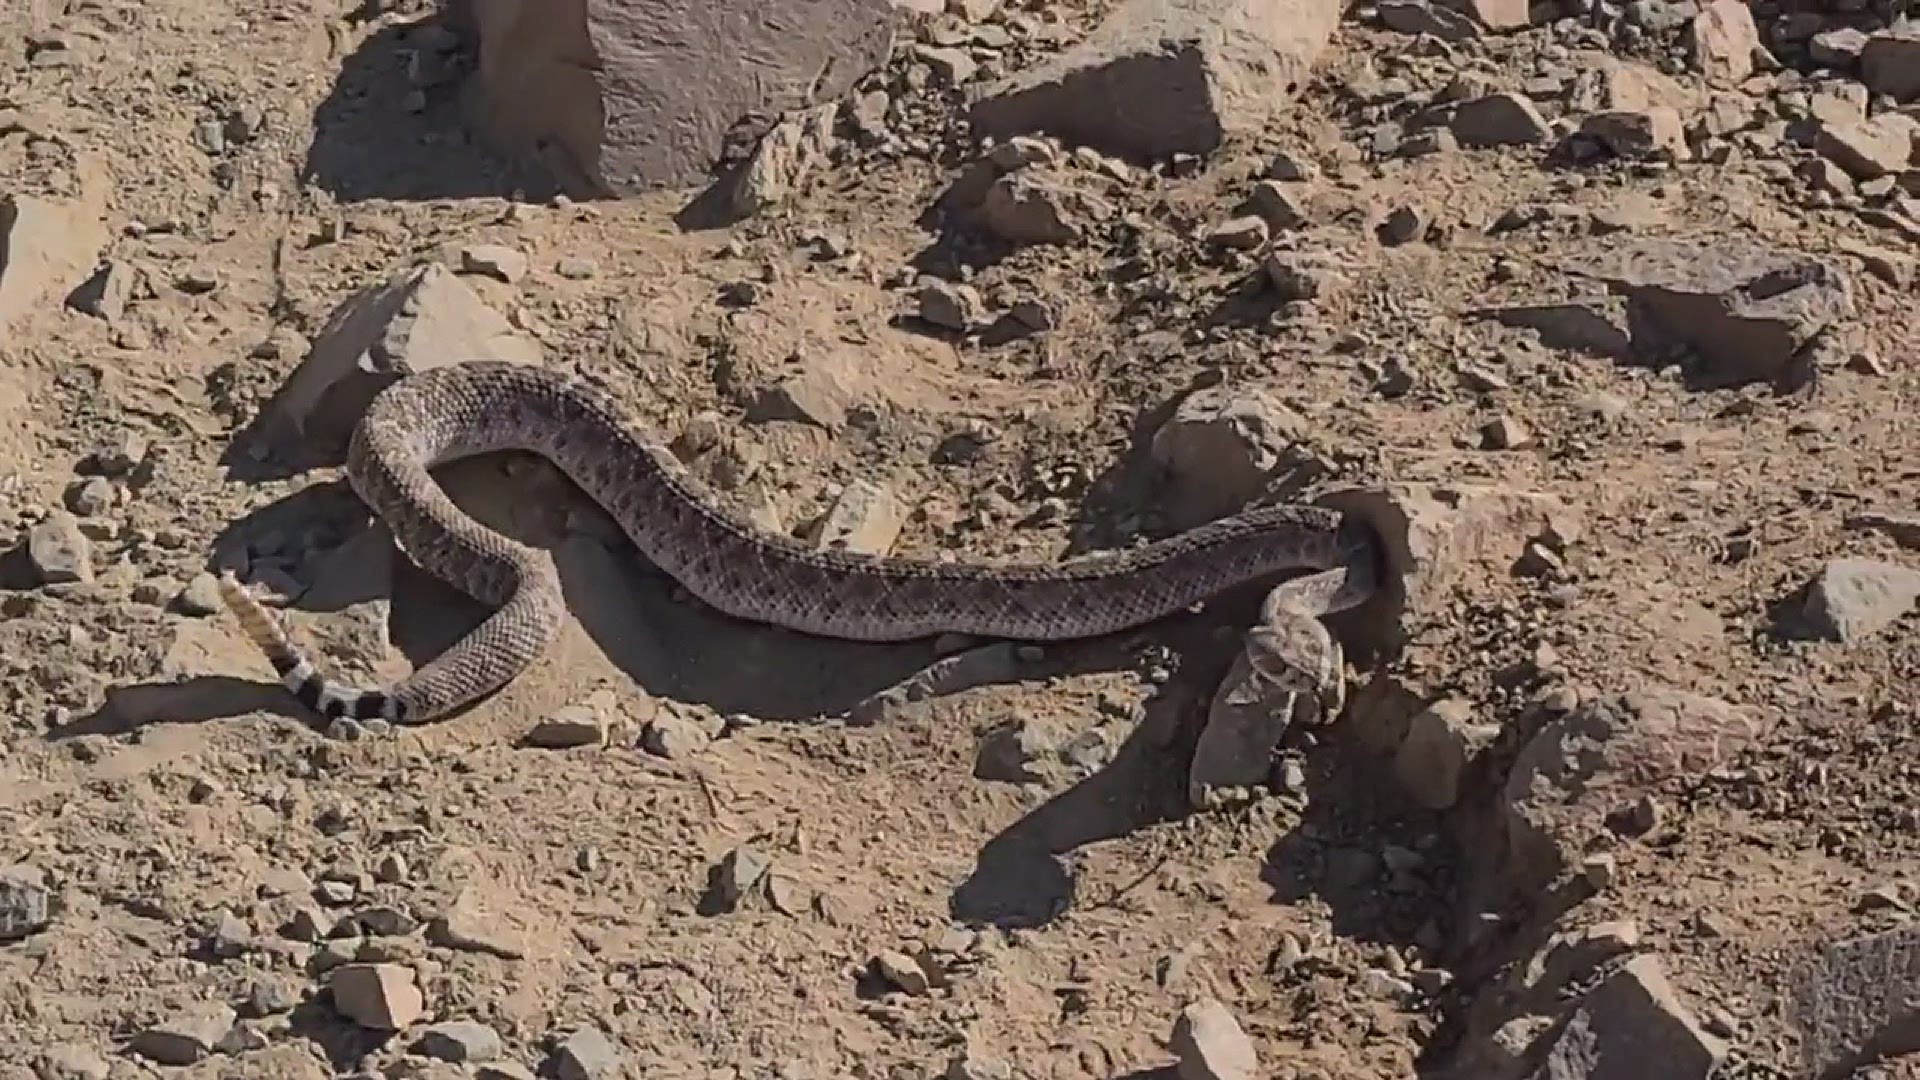 Rattlesnake in Phoenix
Credit: Alec Wilcox